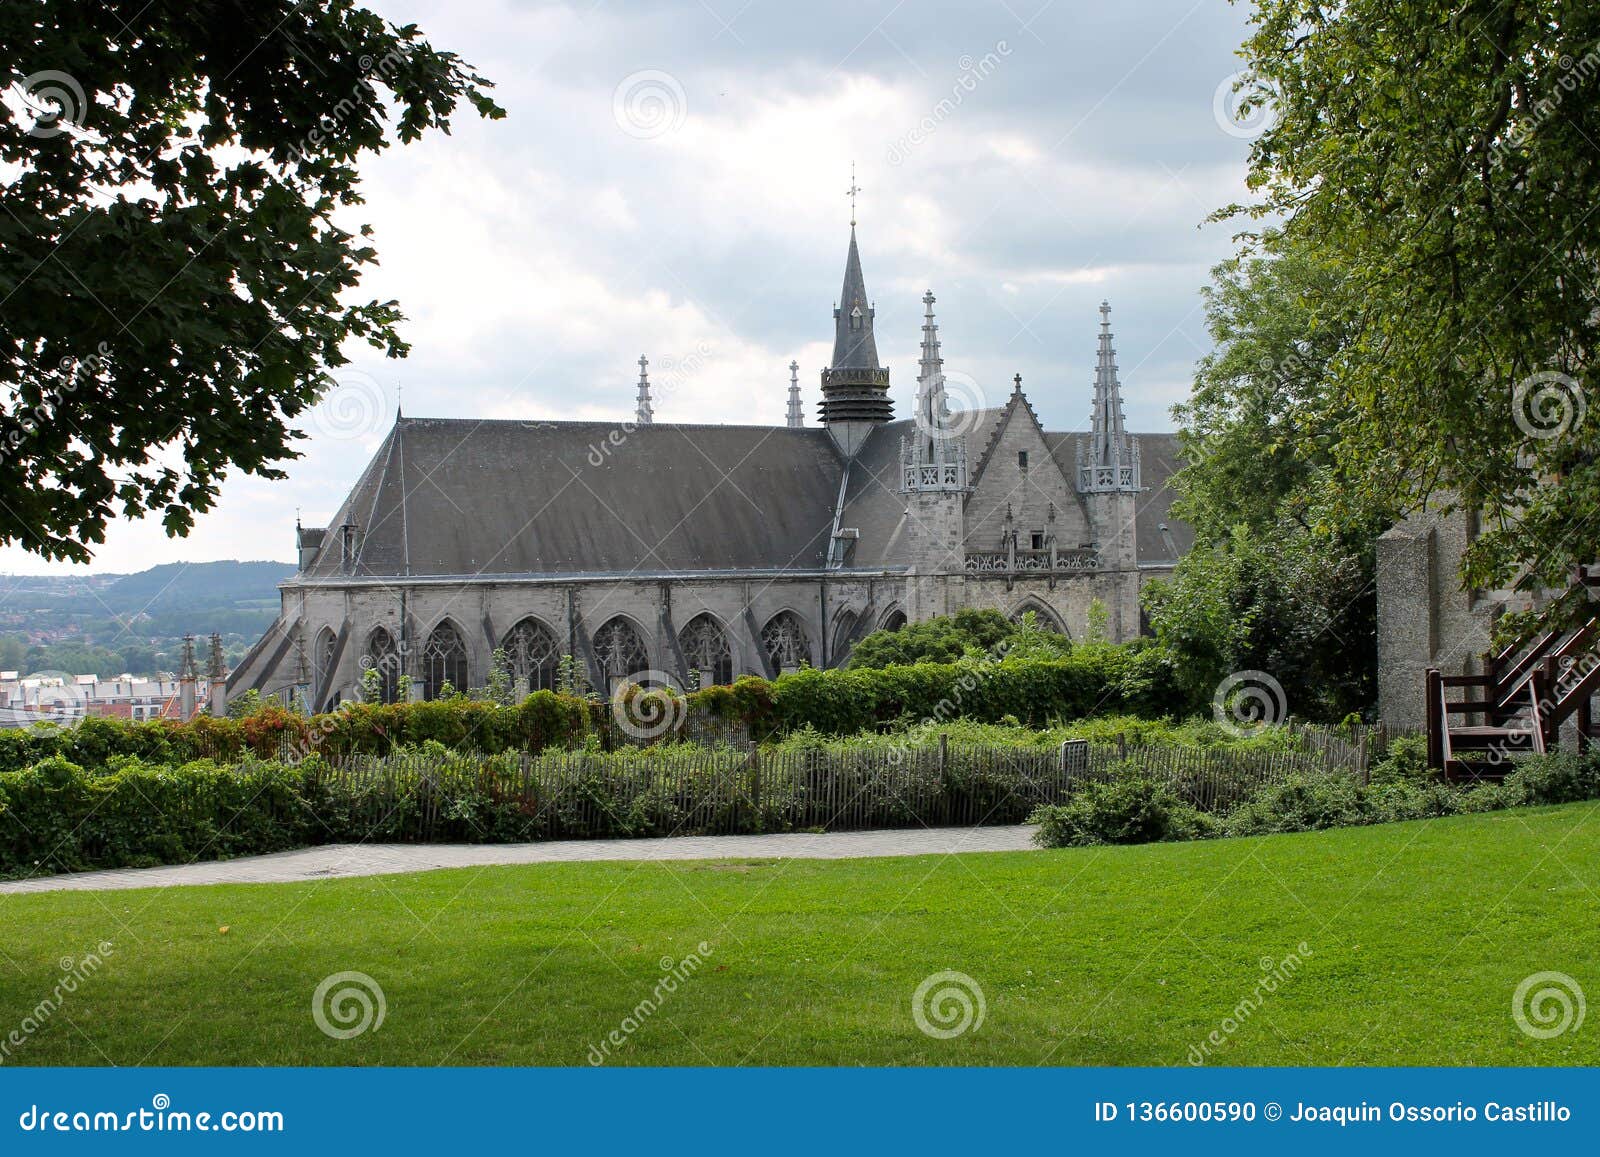 saint waltrude collegiate church, mons, belgium